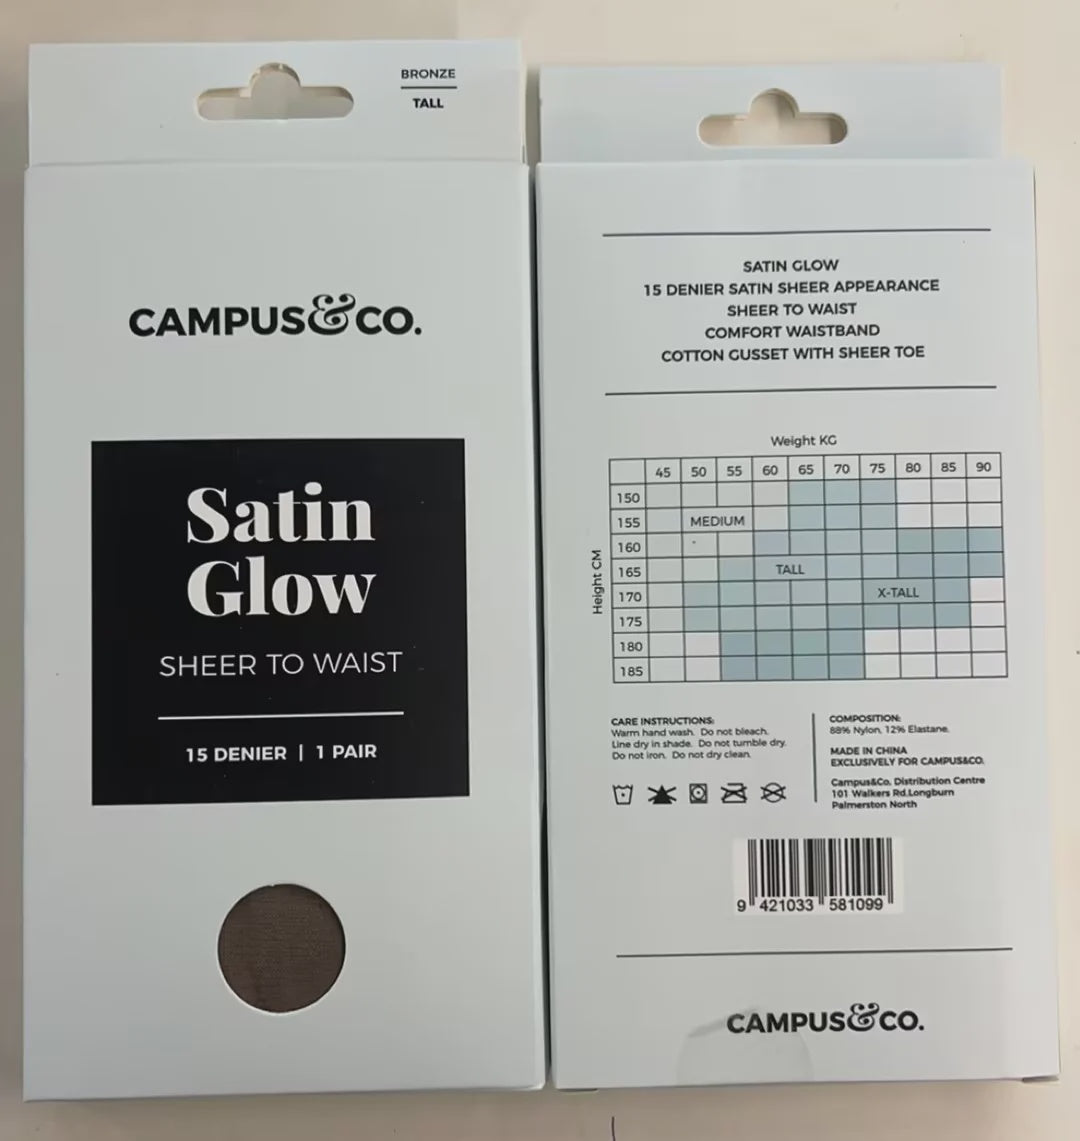 Campus&Co. Satin Glow Bronze Sheer to Waist Tall